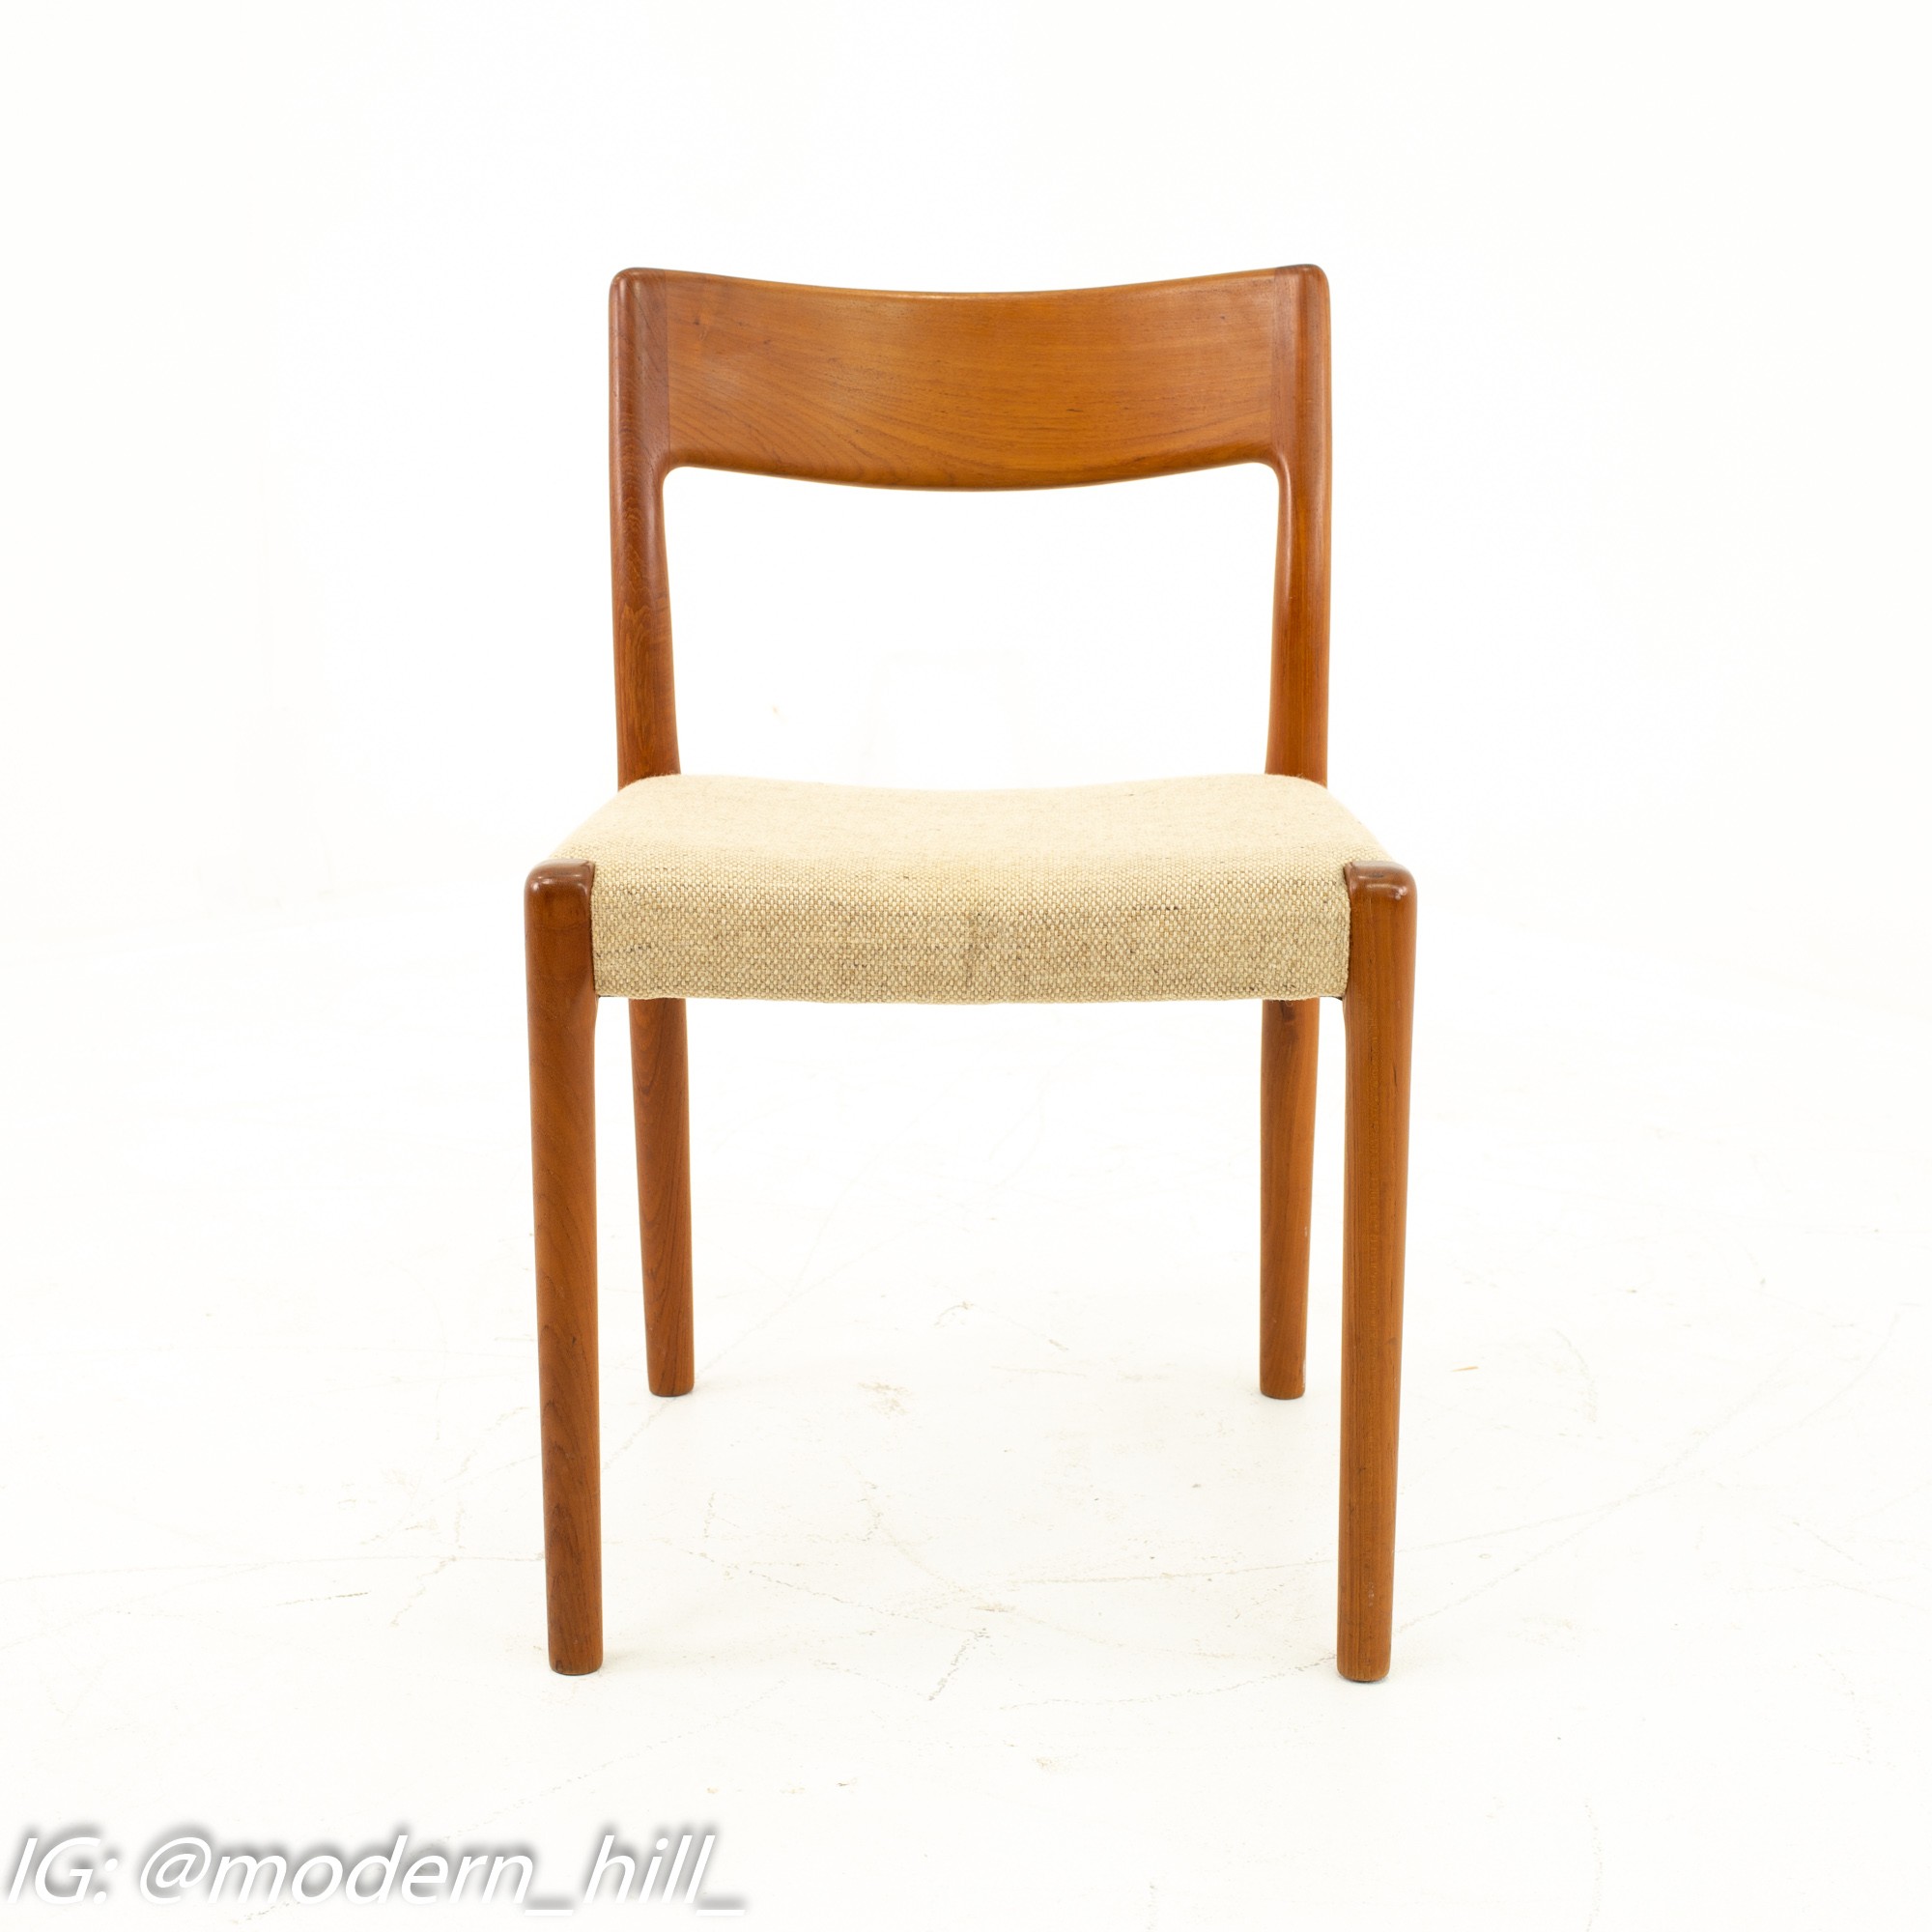 Emc Furniture A/s Mid Century Danish Teak Chairs - Set of 6